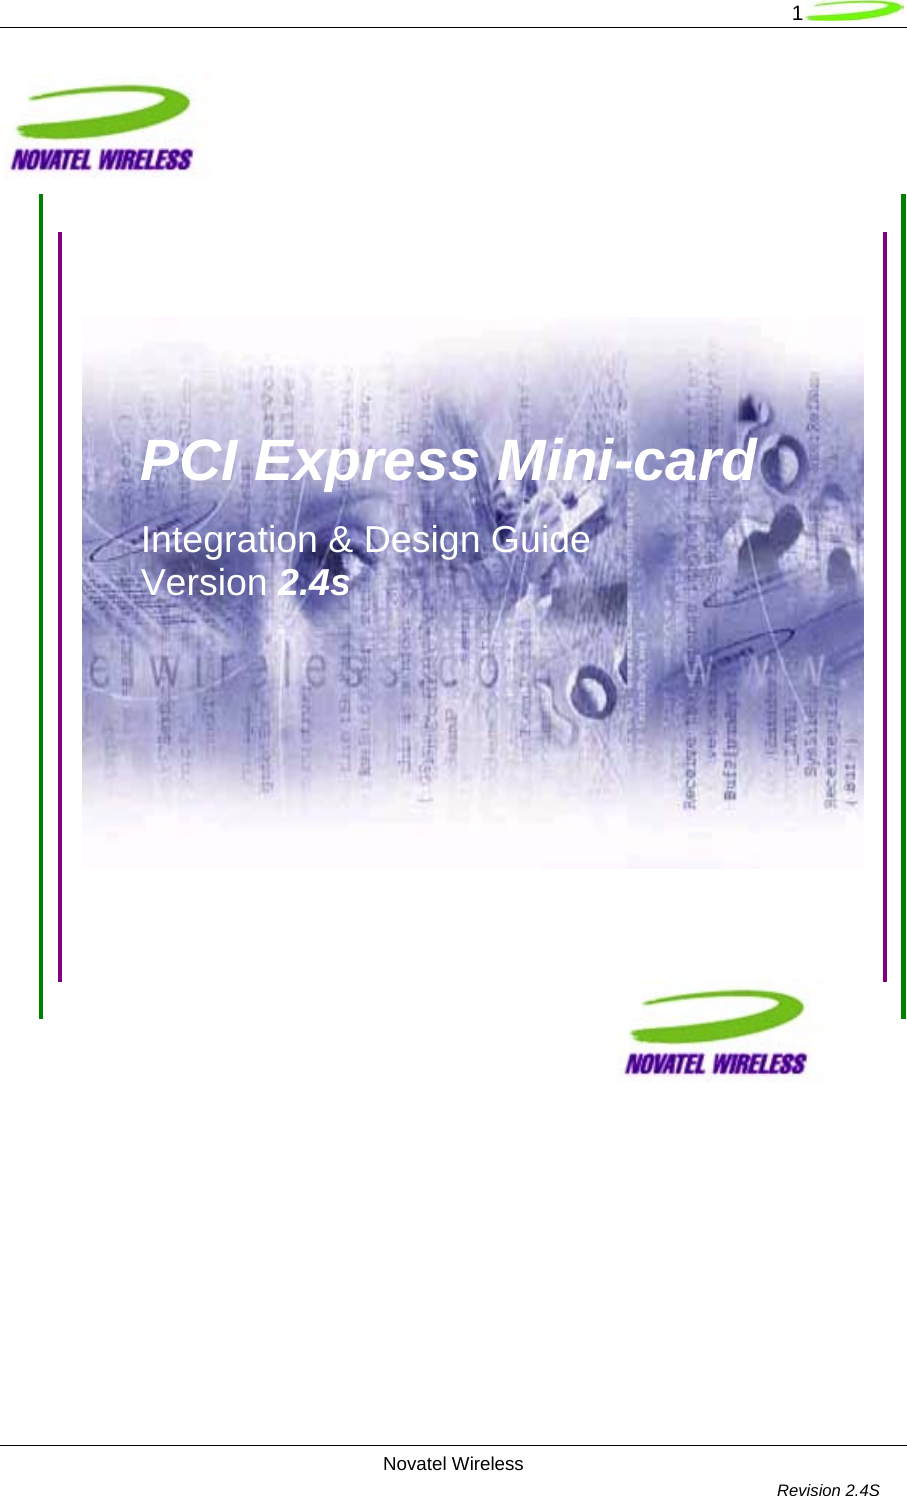   1 Novatel Wireless         Revision 2.4S                                                                                                                                                                              PCI Express Mini-card  Integration &amp; Design Guide Version 2.4s  